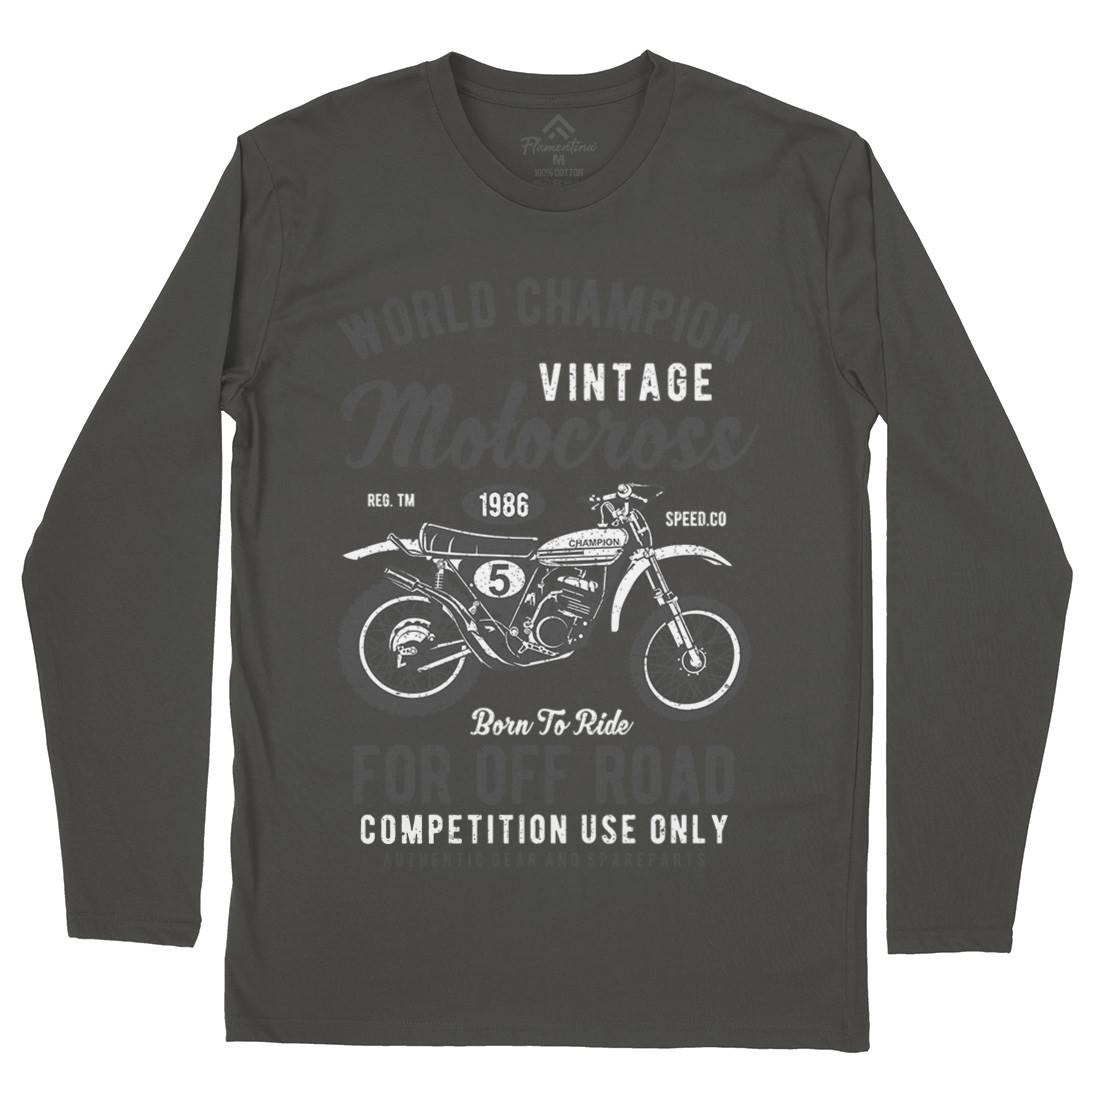 Vintage Motocross Mens Long Sleeve T-Shirt Motorcycles A785